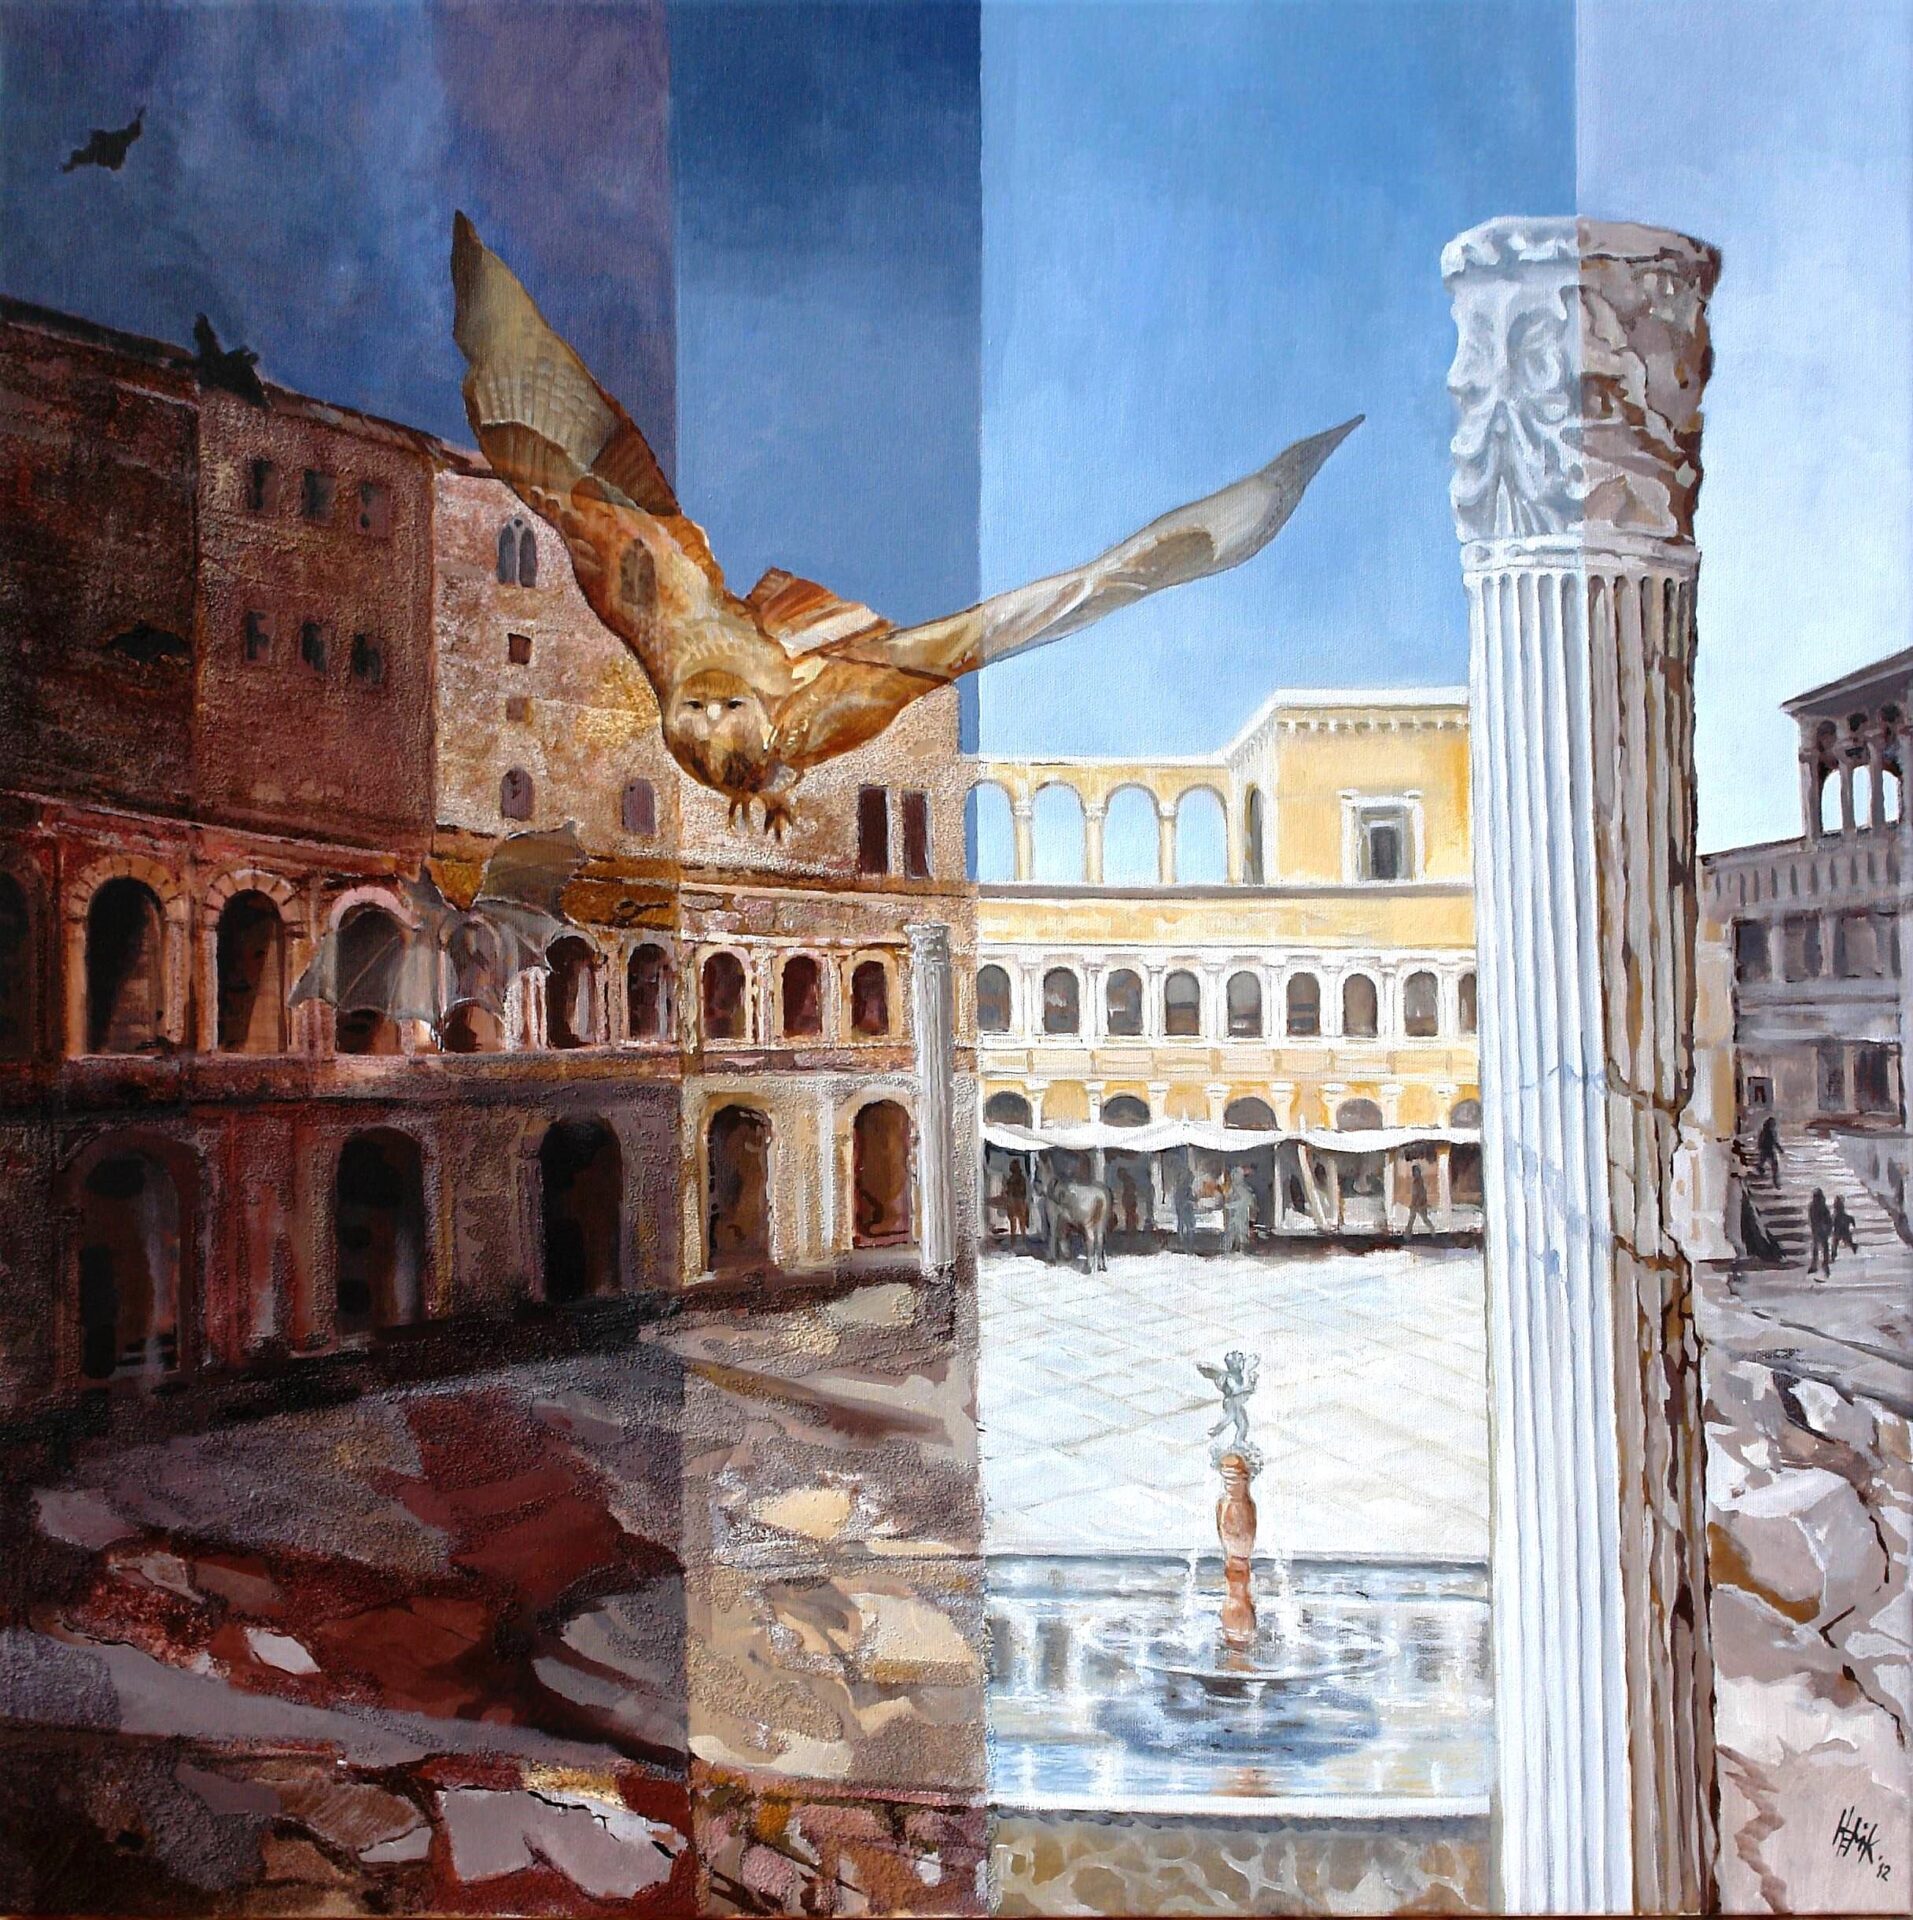 Timelaps of the Roman market Forum Trajanum